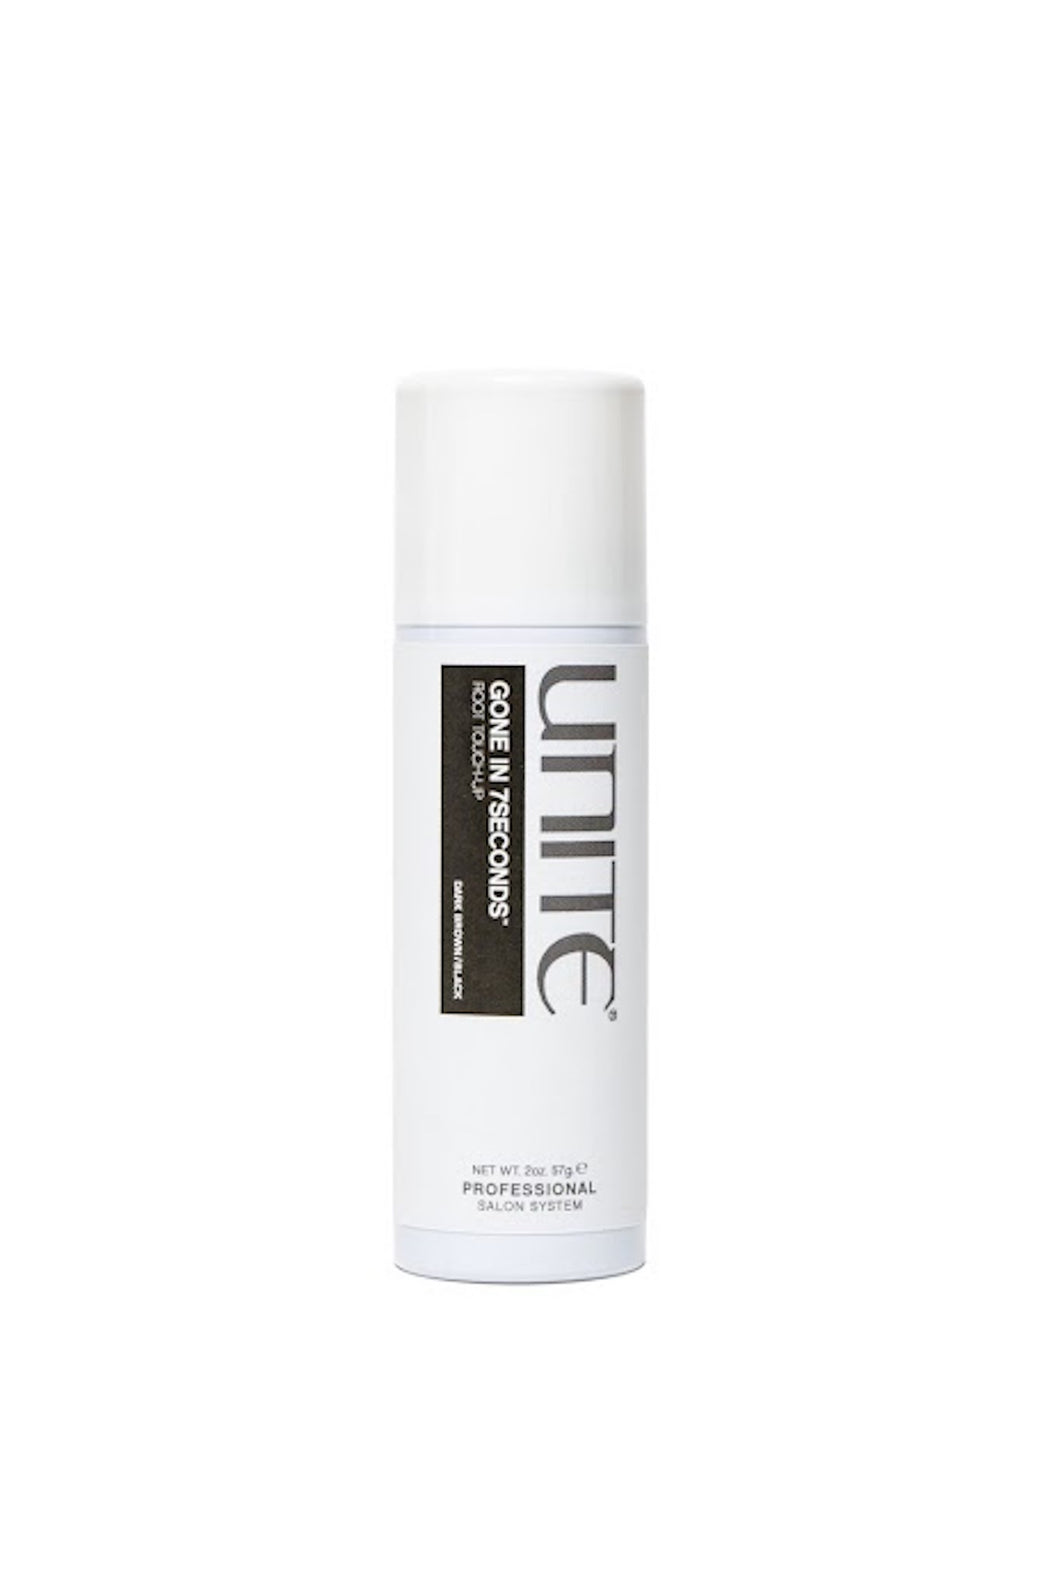 Unite - Root touch up spray white aeroaol 2 oz. bottle with white top